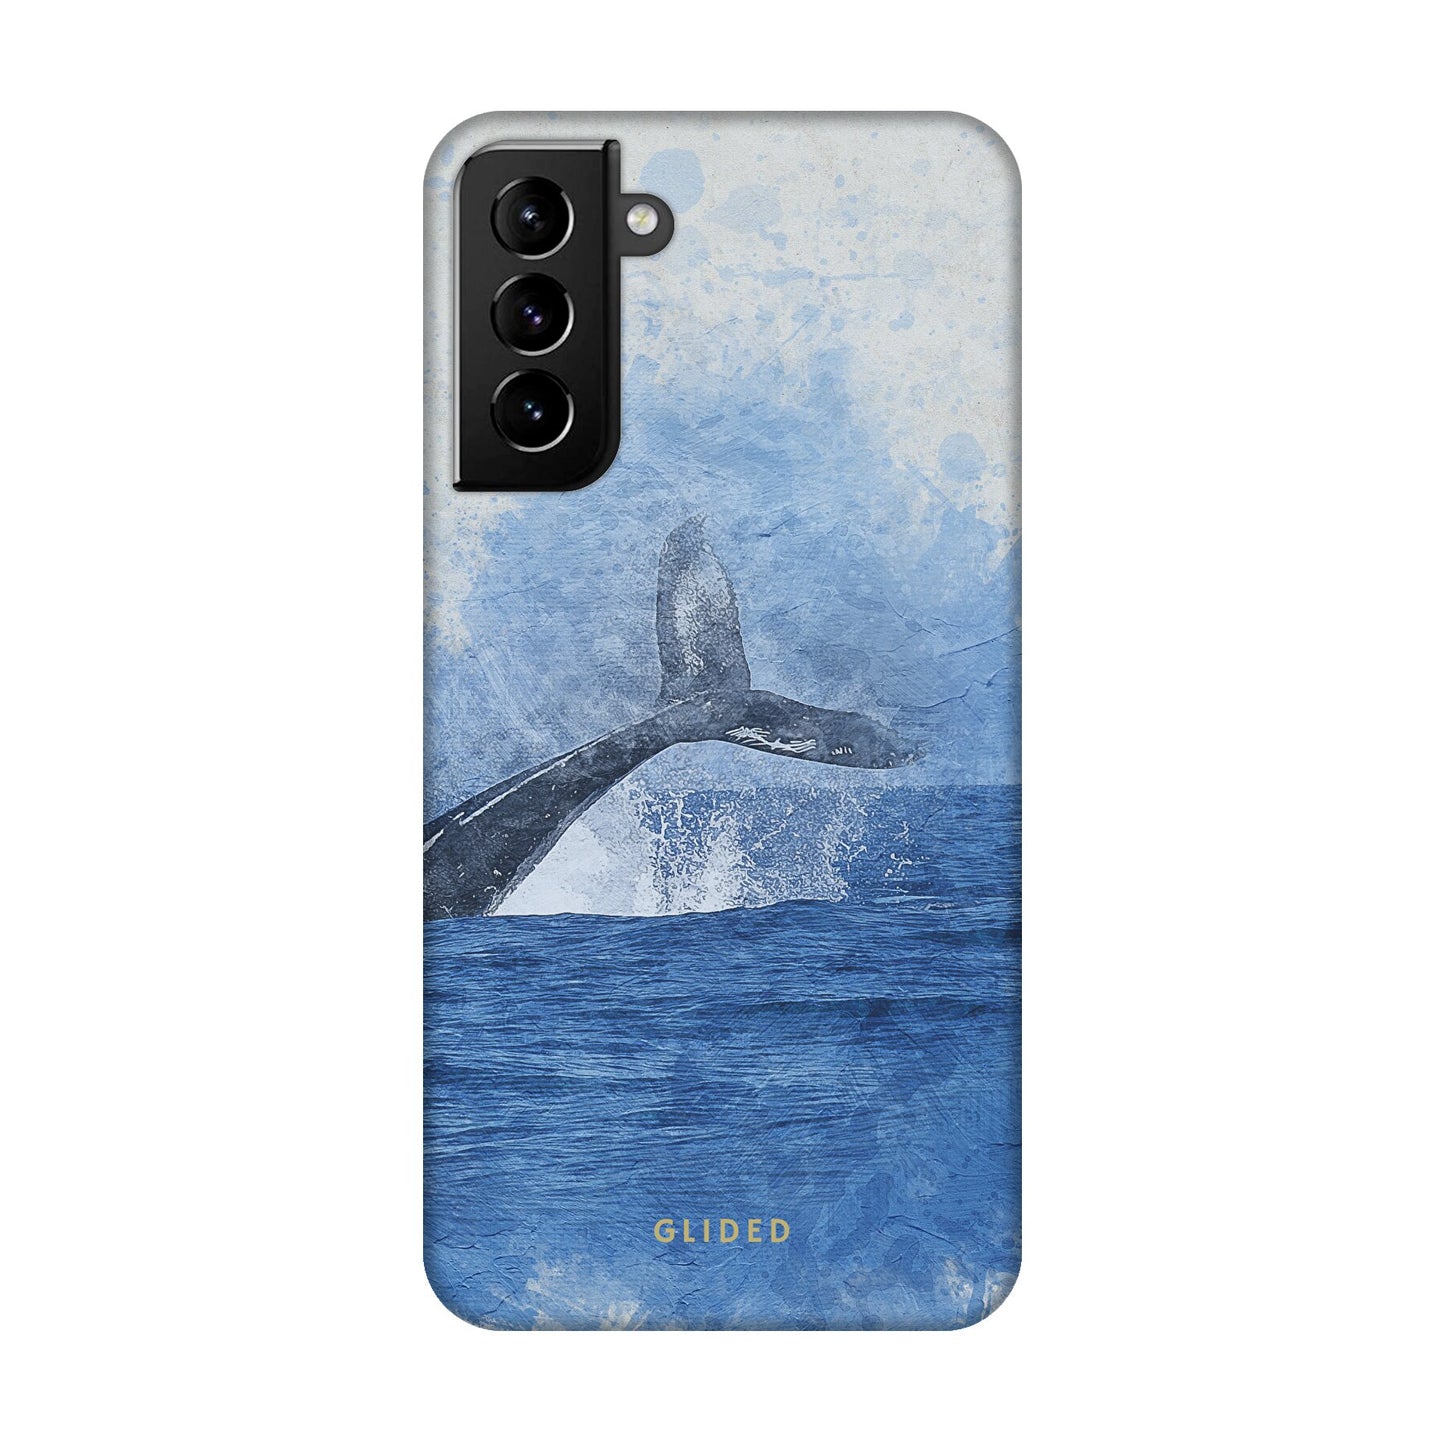 Oceanic - Samsung Galaxy S21 Plus 5G Handyhülle Tough case